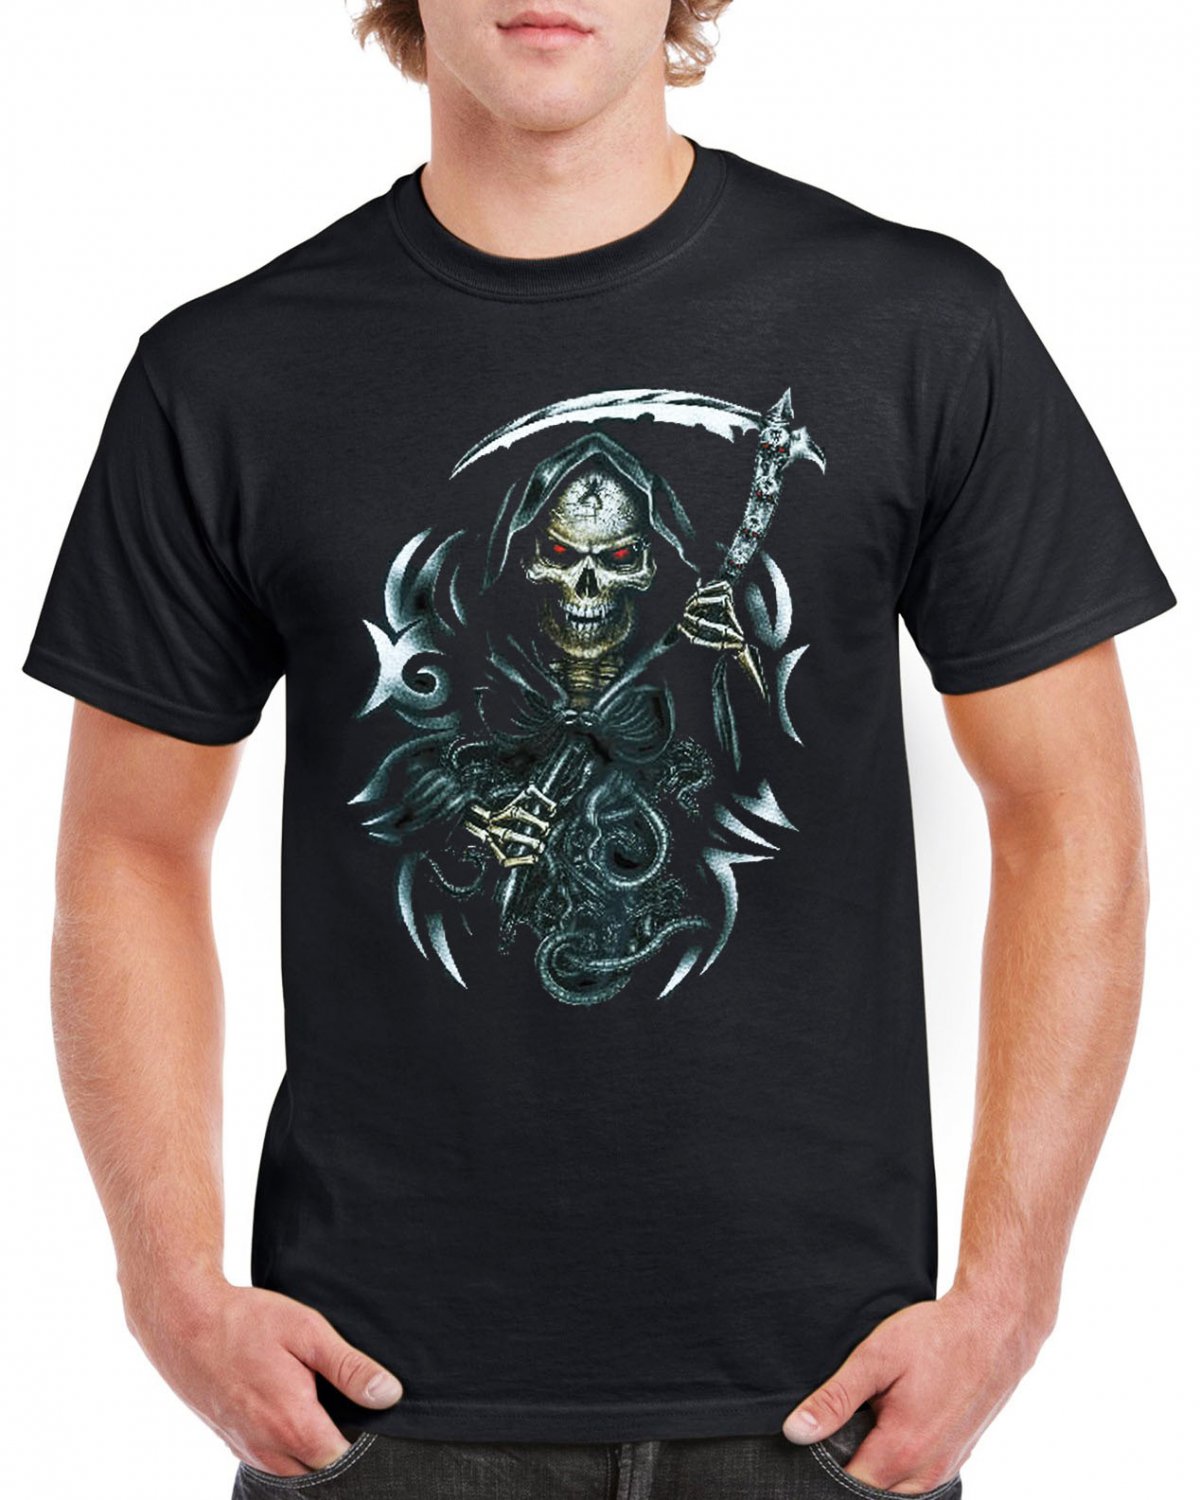 Heavy Metal Skull Sickle T-shirt Devil Cool Tshirt Music Festival Top Tee